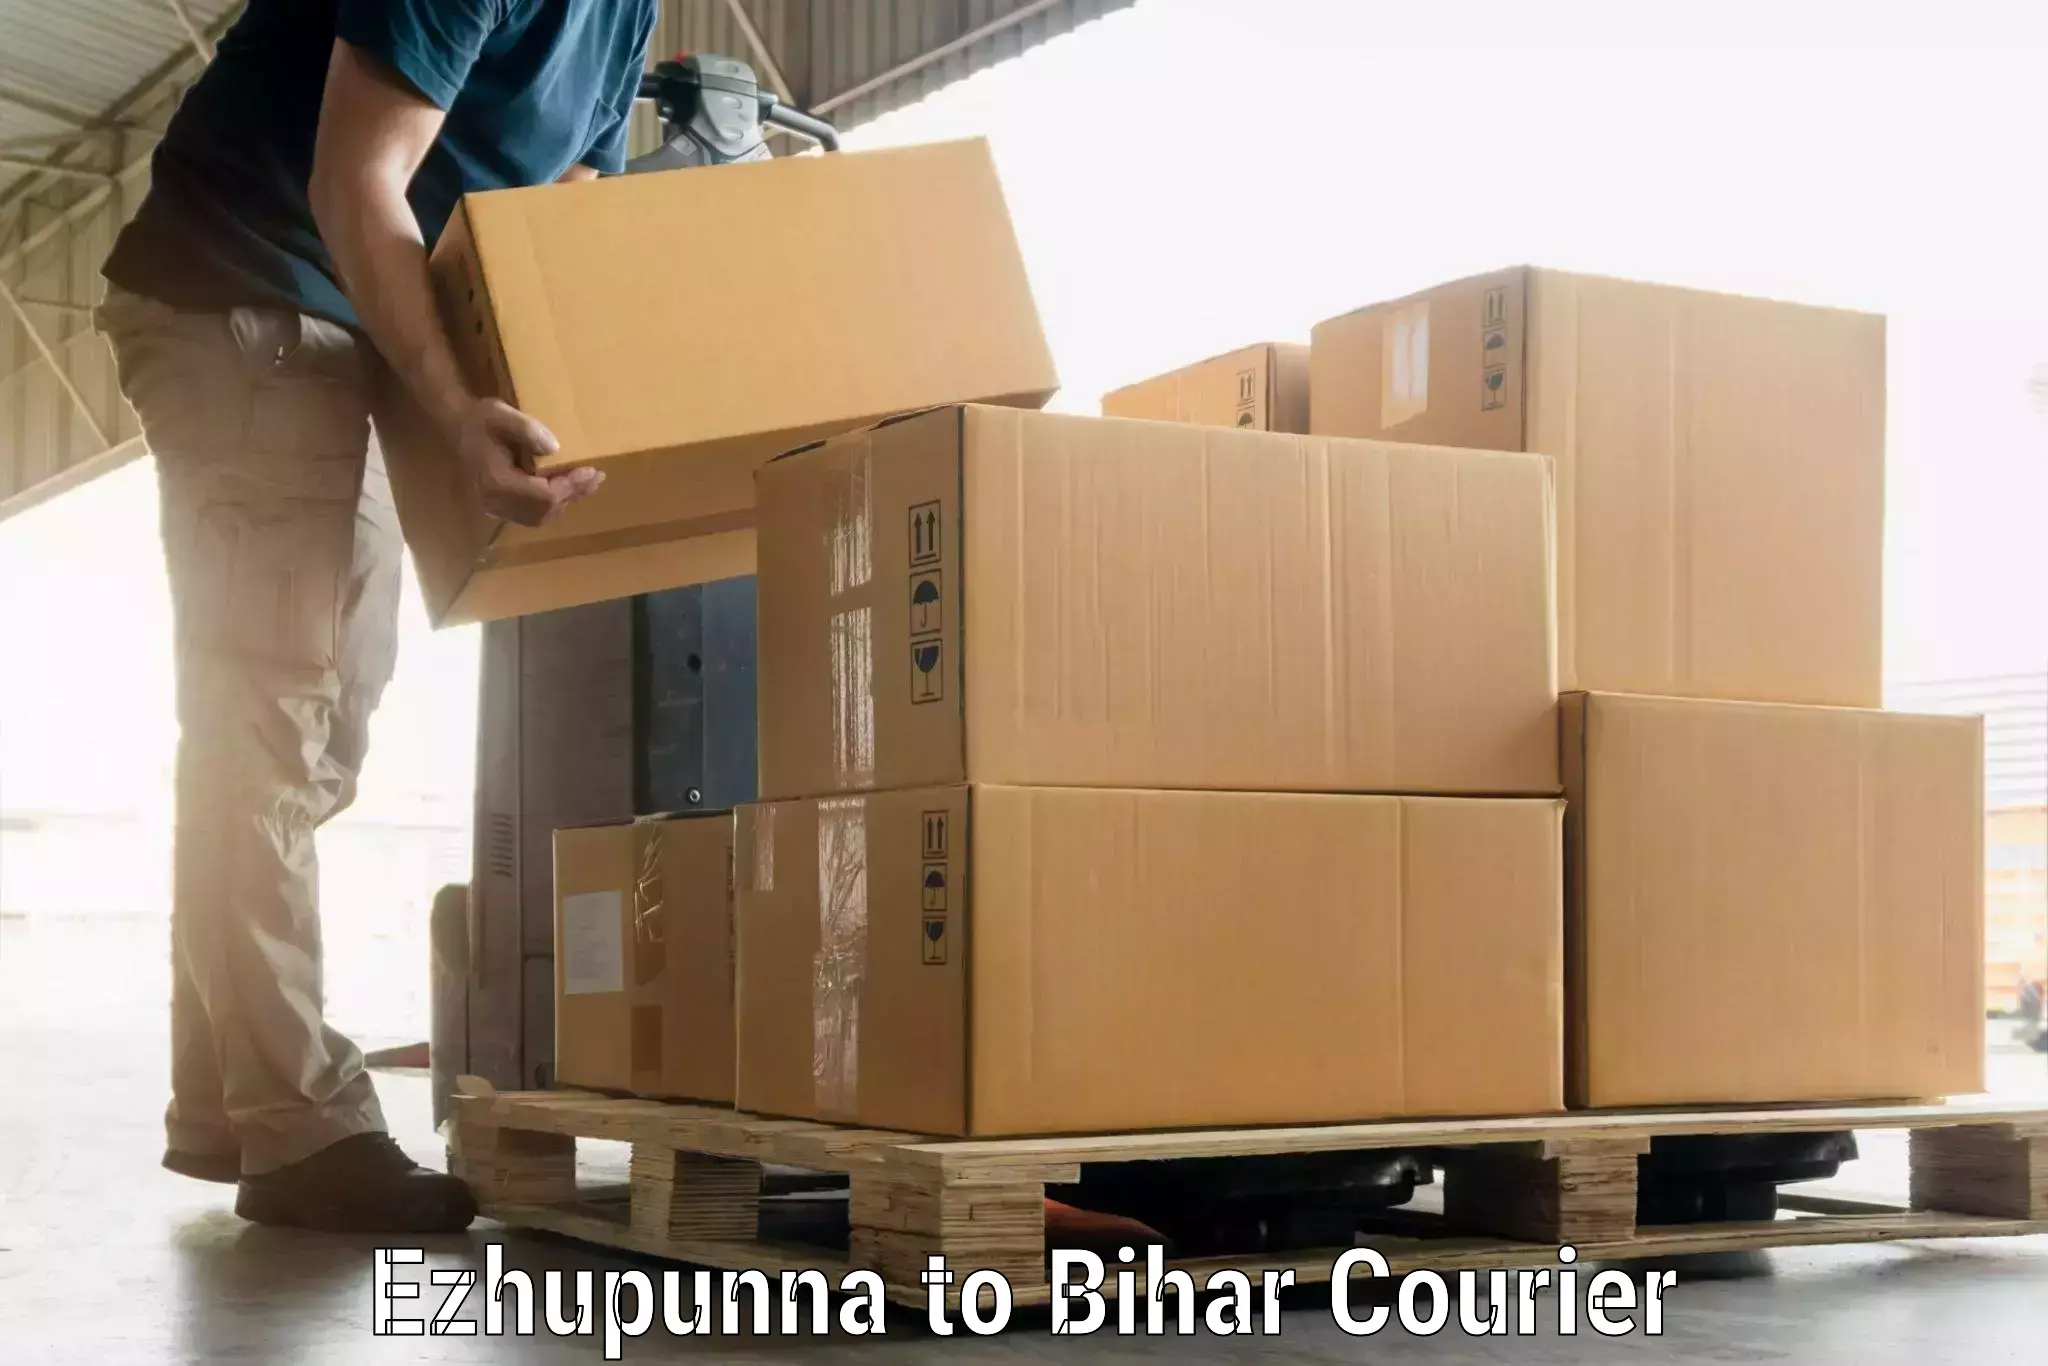 Luggage transport company Ezhupunna to Rusera